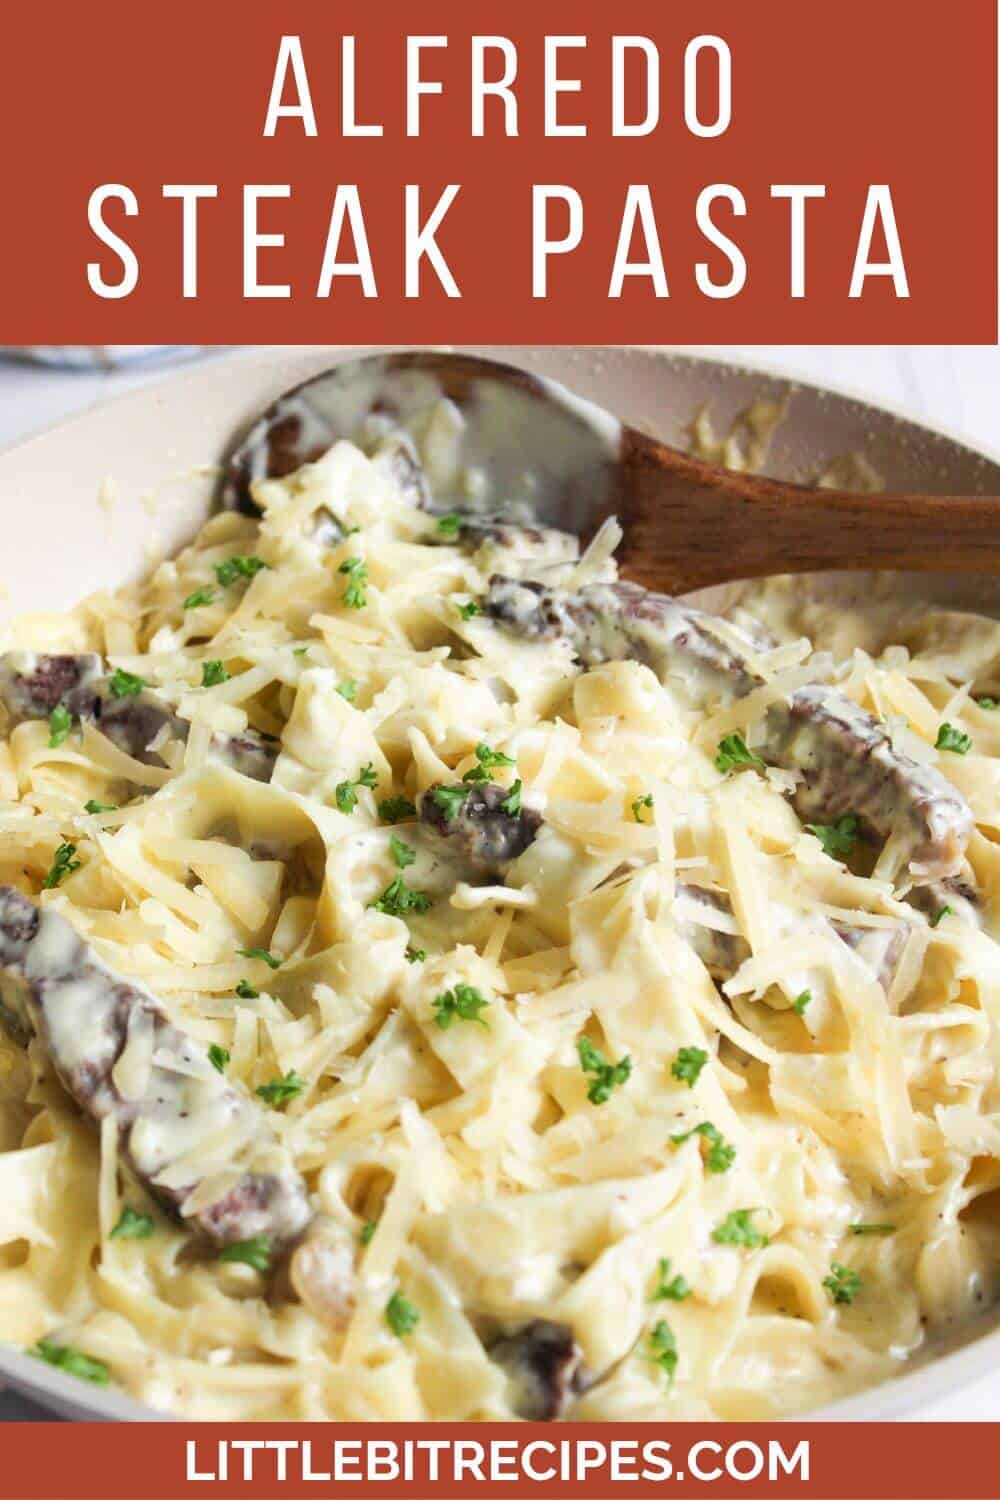 Alfredo steak pasta with text.